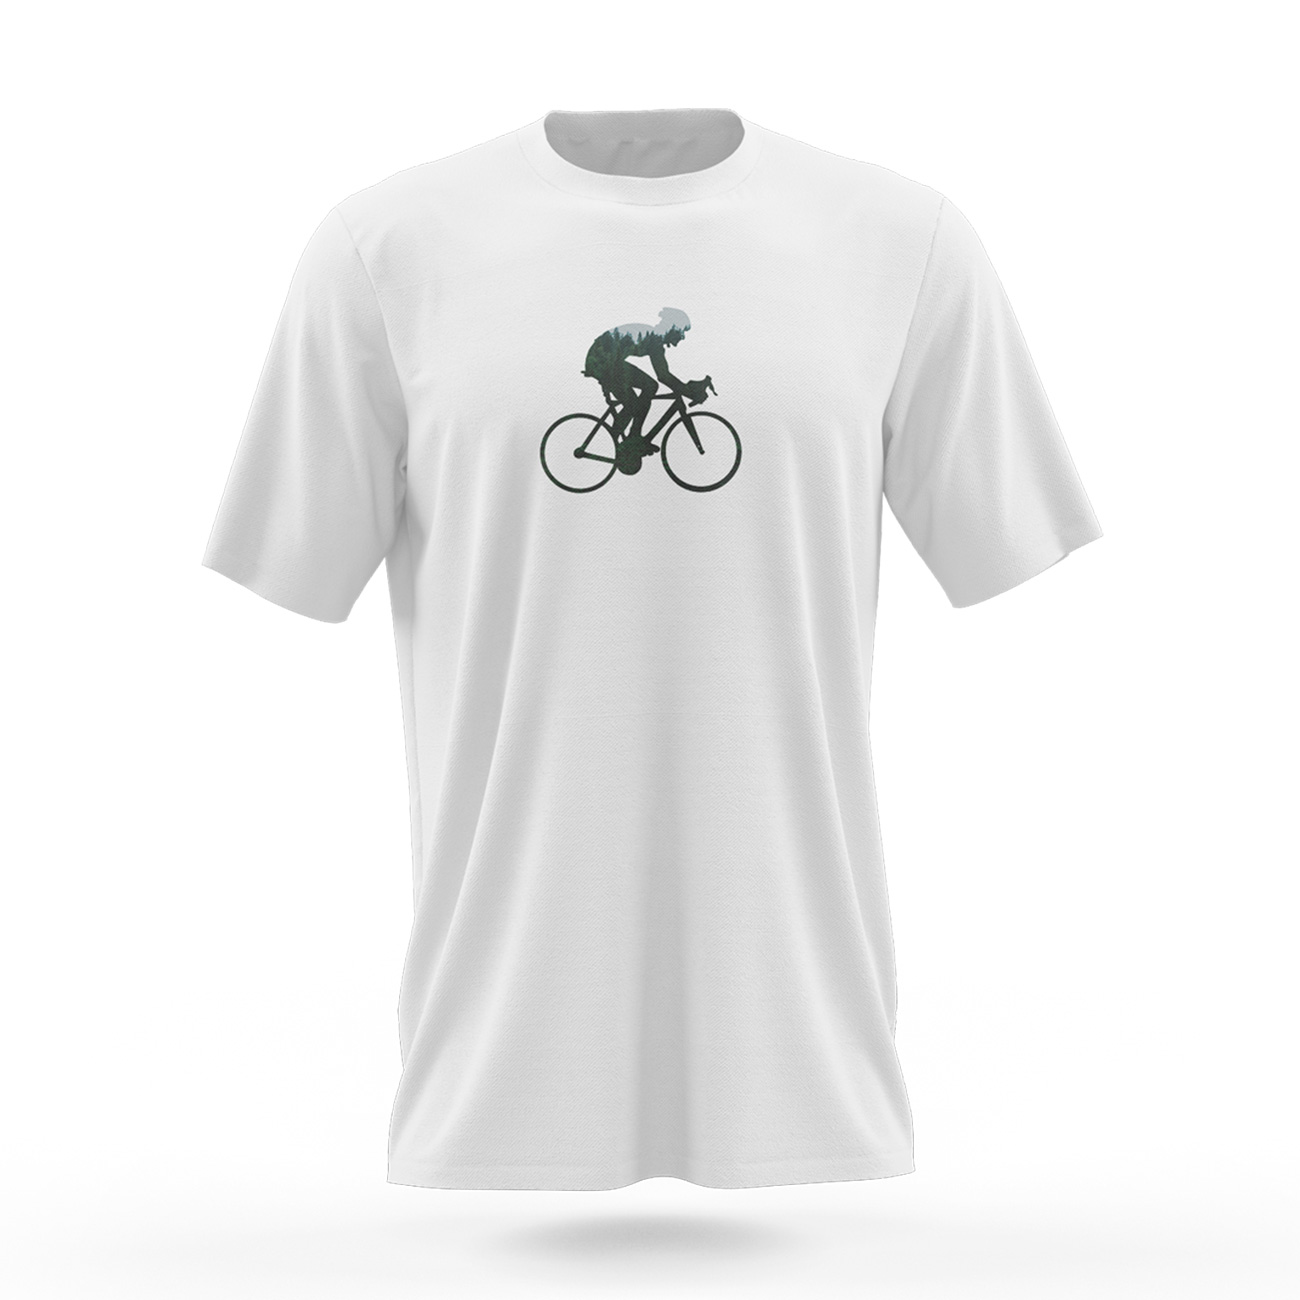 
                NU. BY HOLOKOLO Cyklistické tričko s krátkym rukávom - BEHIND BARS - biela/zelená L
            